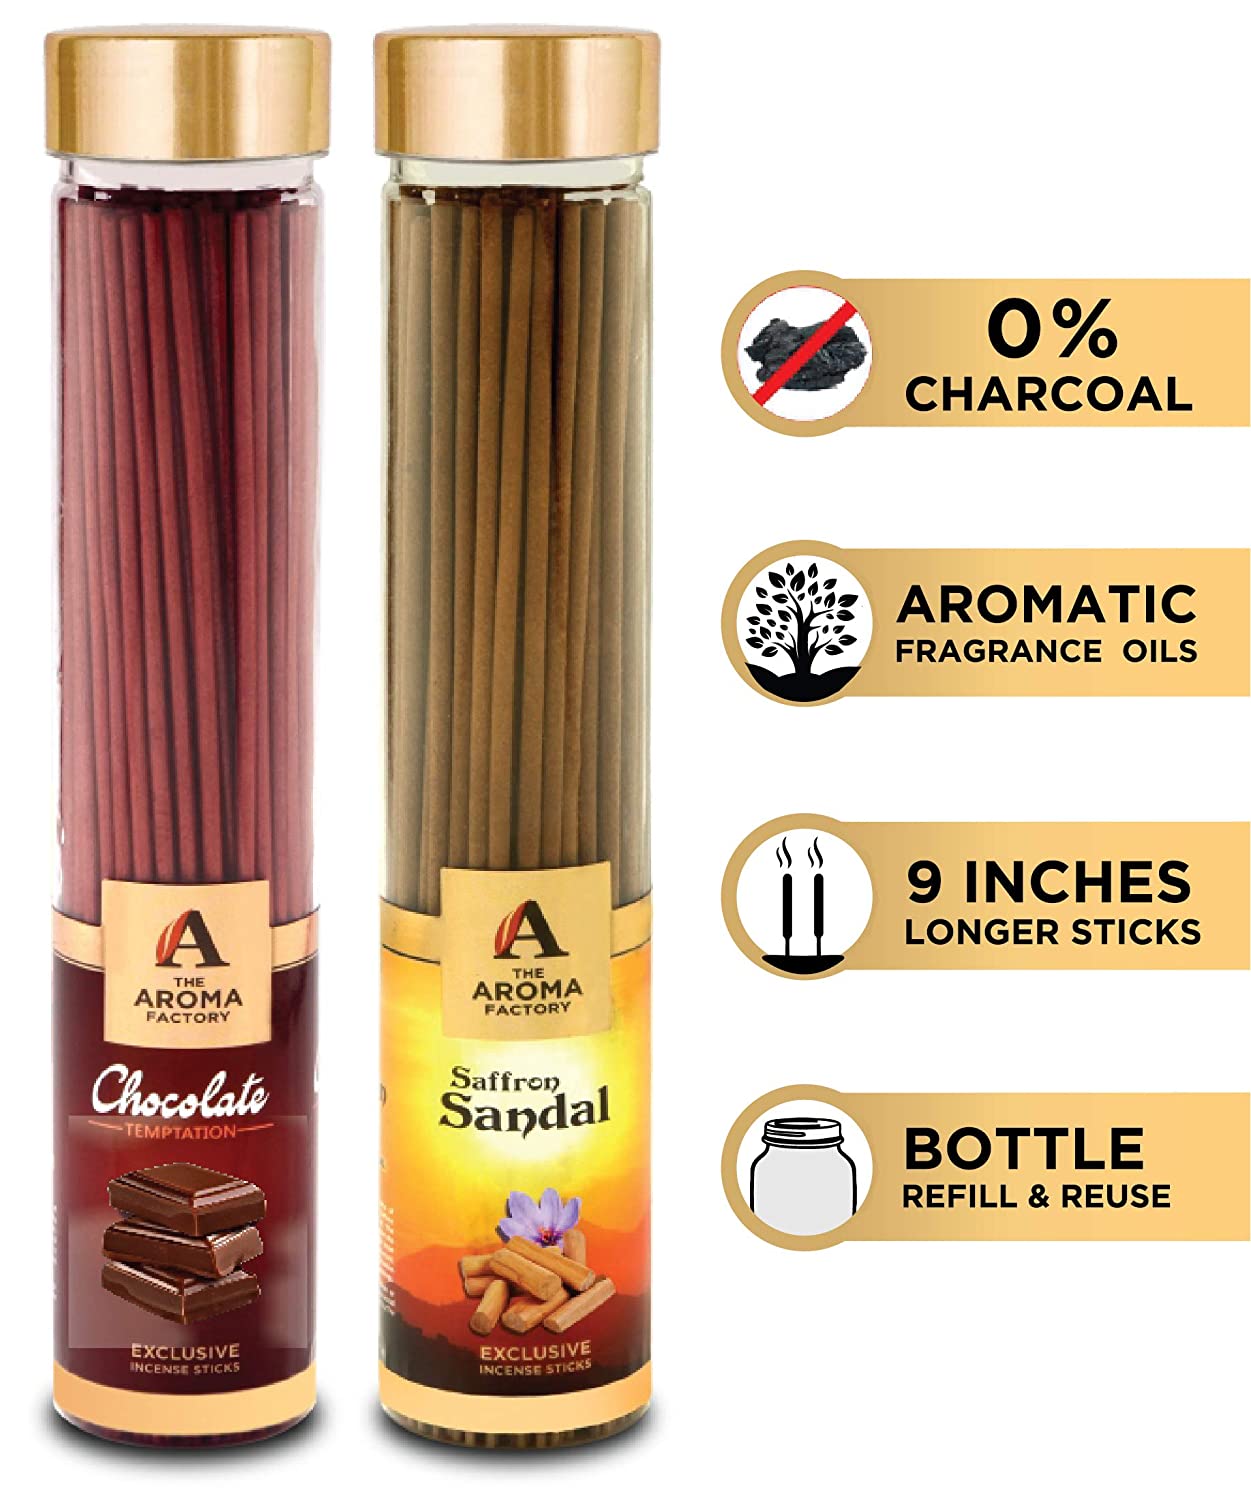 The Aroma Factory Chocolate & Kesar Chandan Saffron Sandal Agarbatti (Charcoal Free & Low Smoke) Bottle Pack of 2 x 100